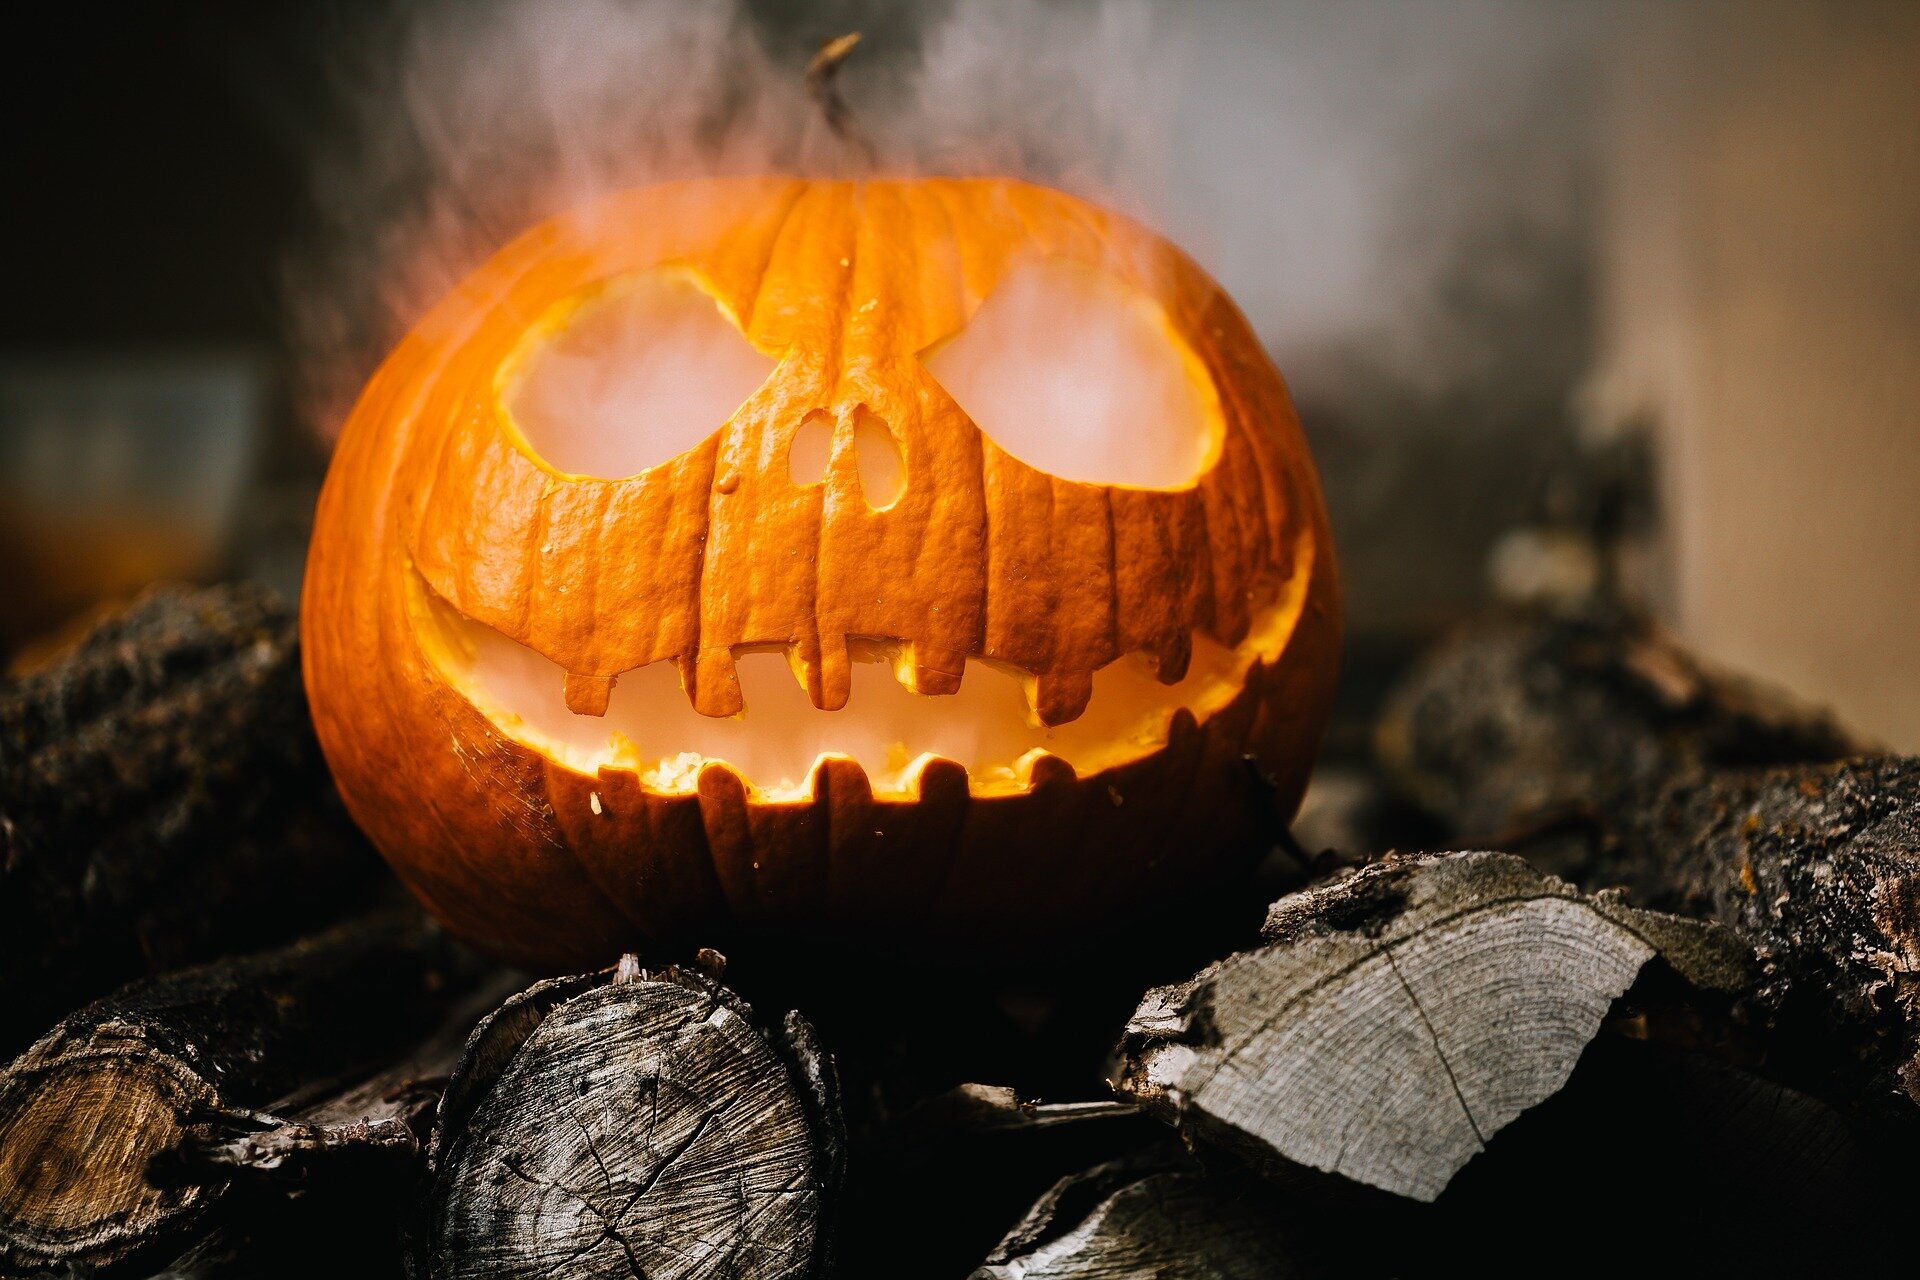 After October festivities, Illinoisans smash thousands of pumpkins to divert them from landfills, cut methane